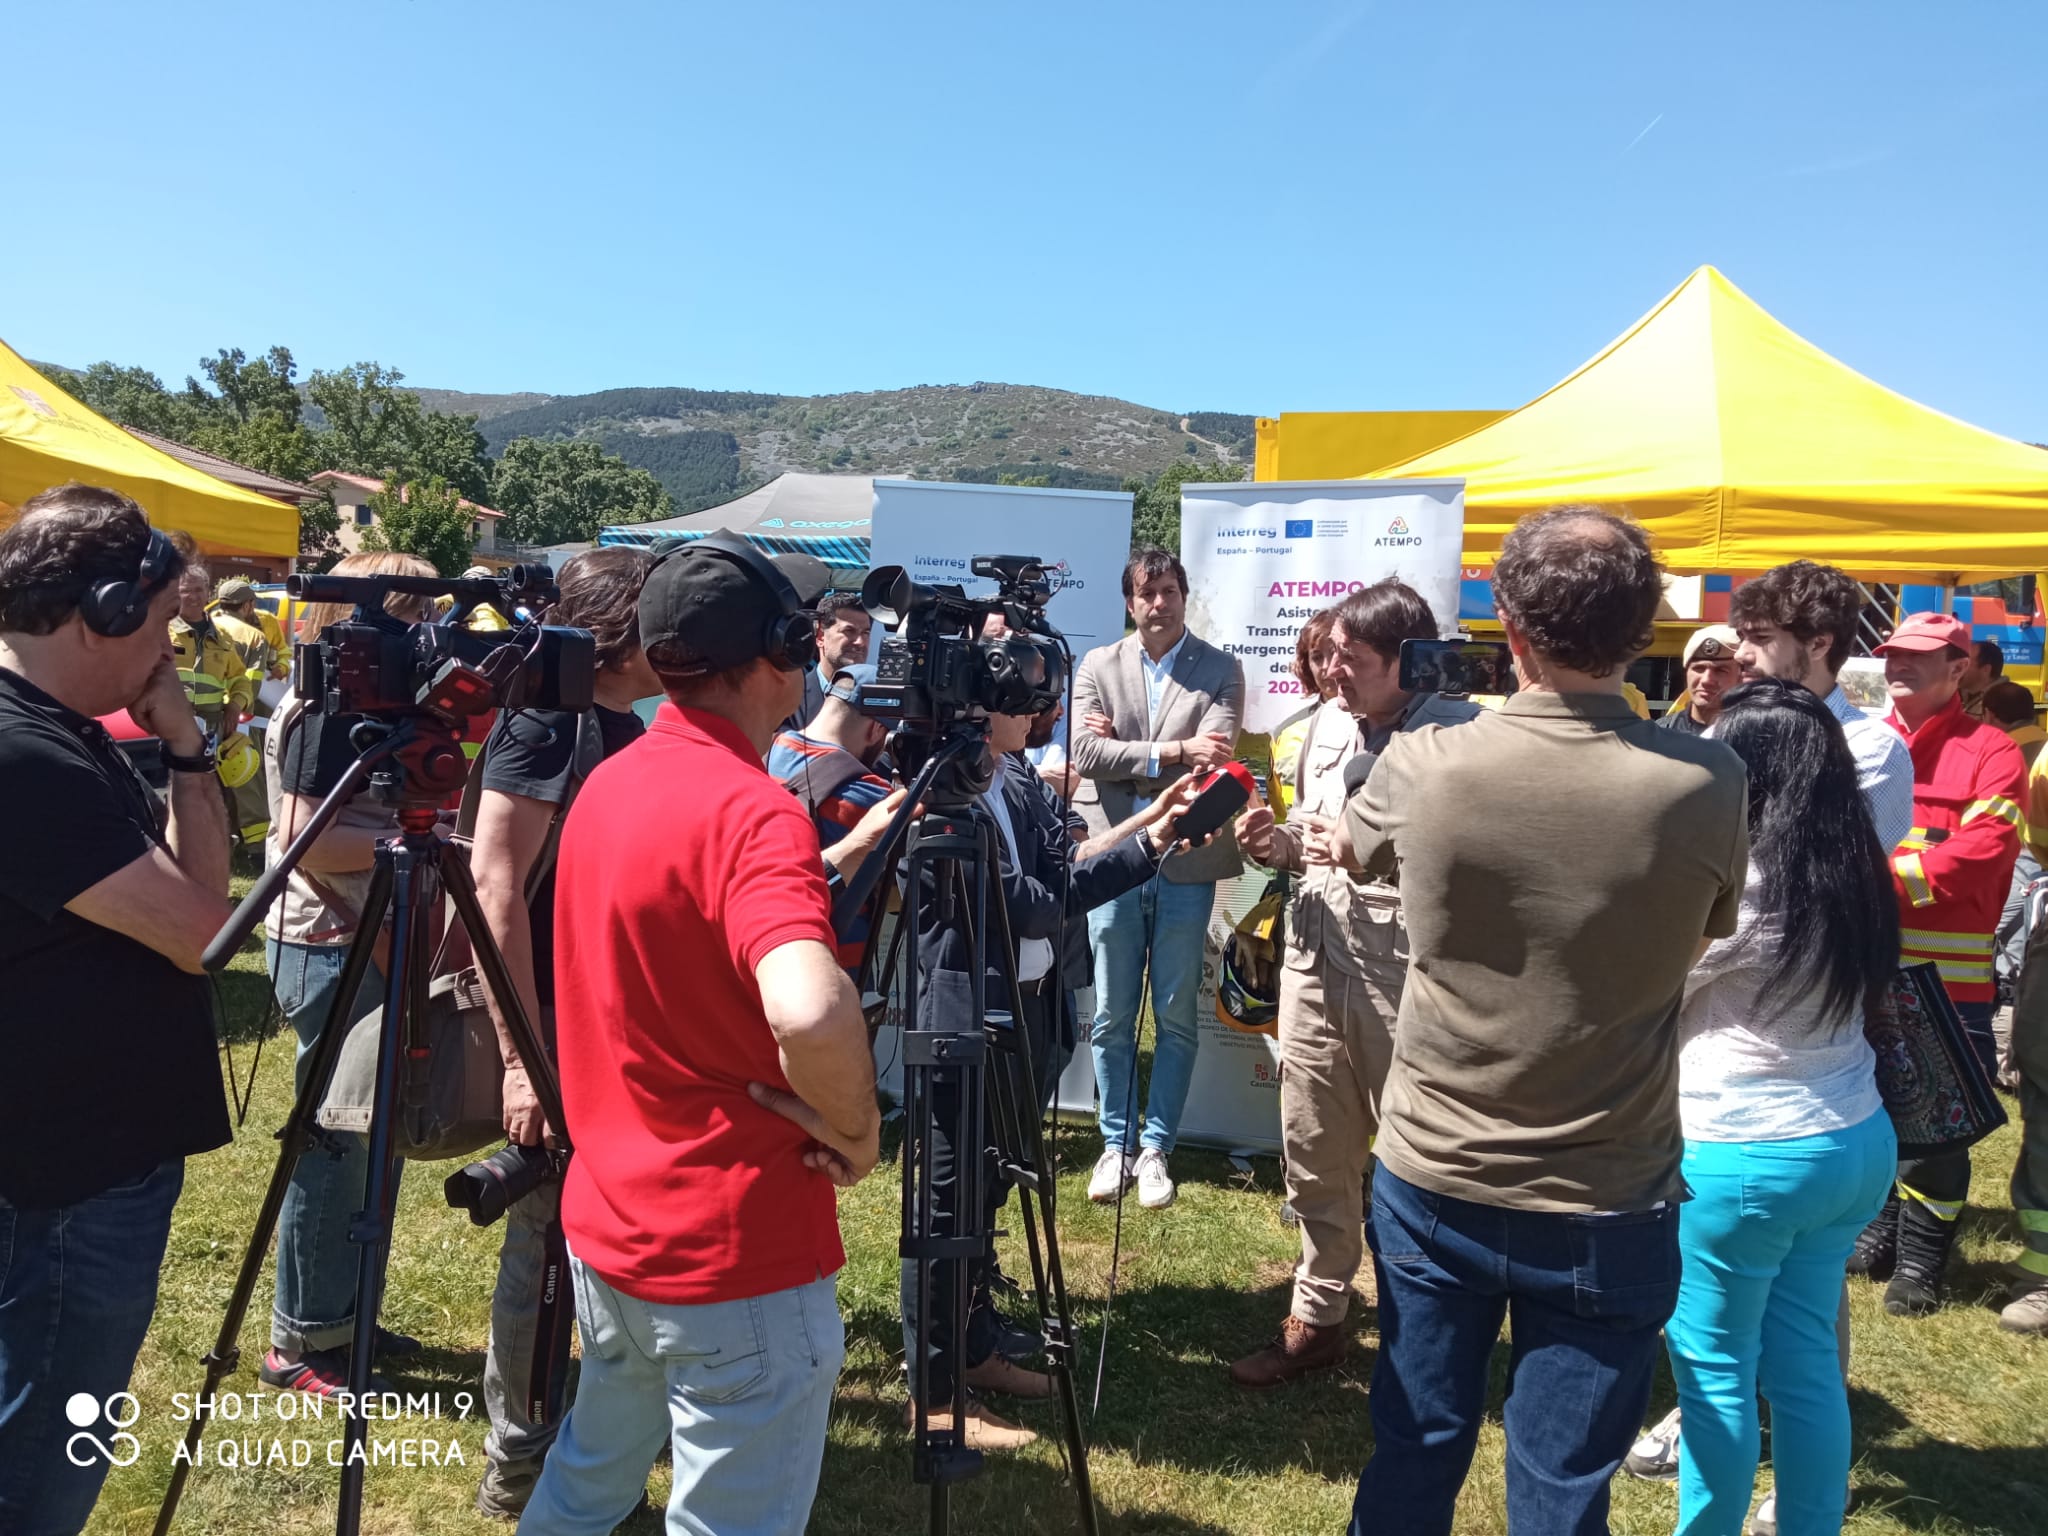 Image 2 of article Galicia participa no simulacro de incendio forestal en zona fronteiriza realizado en Salamanca no marco do proxecto Interreg Atempo